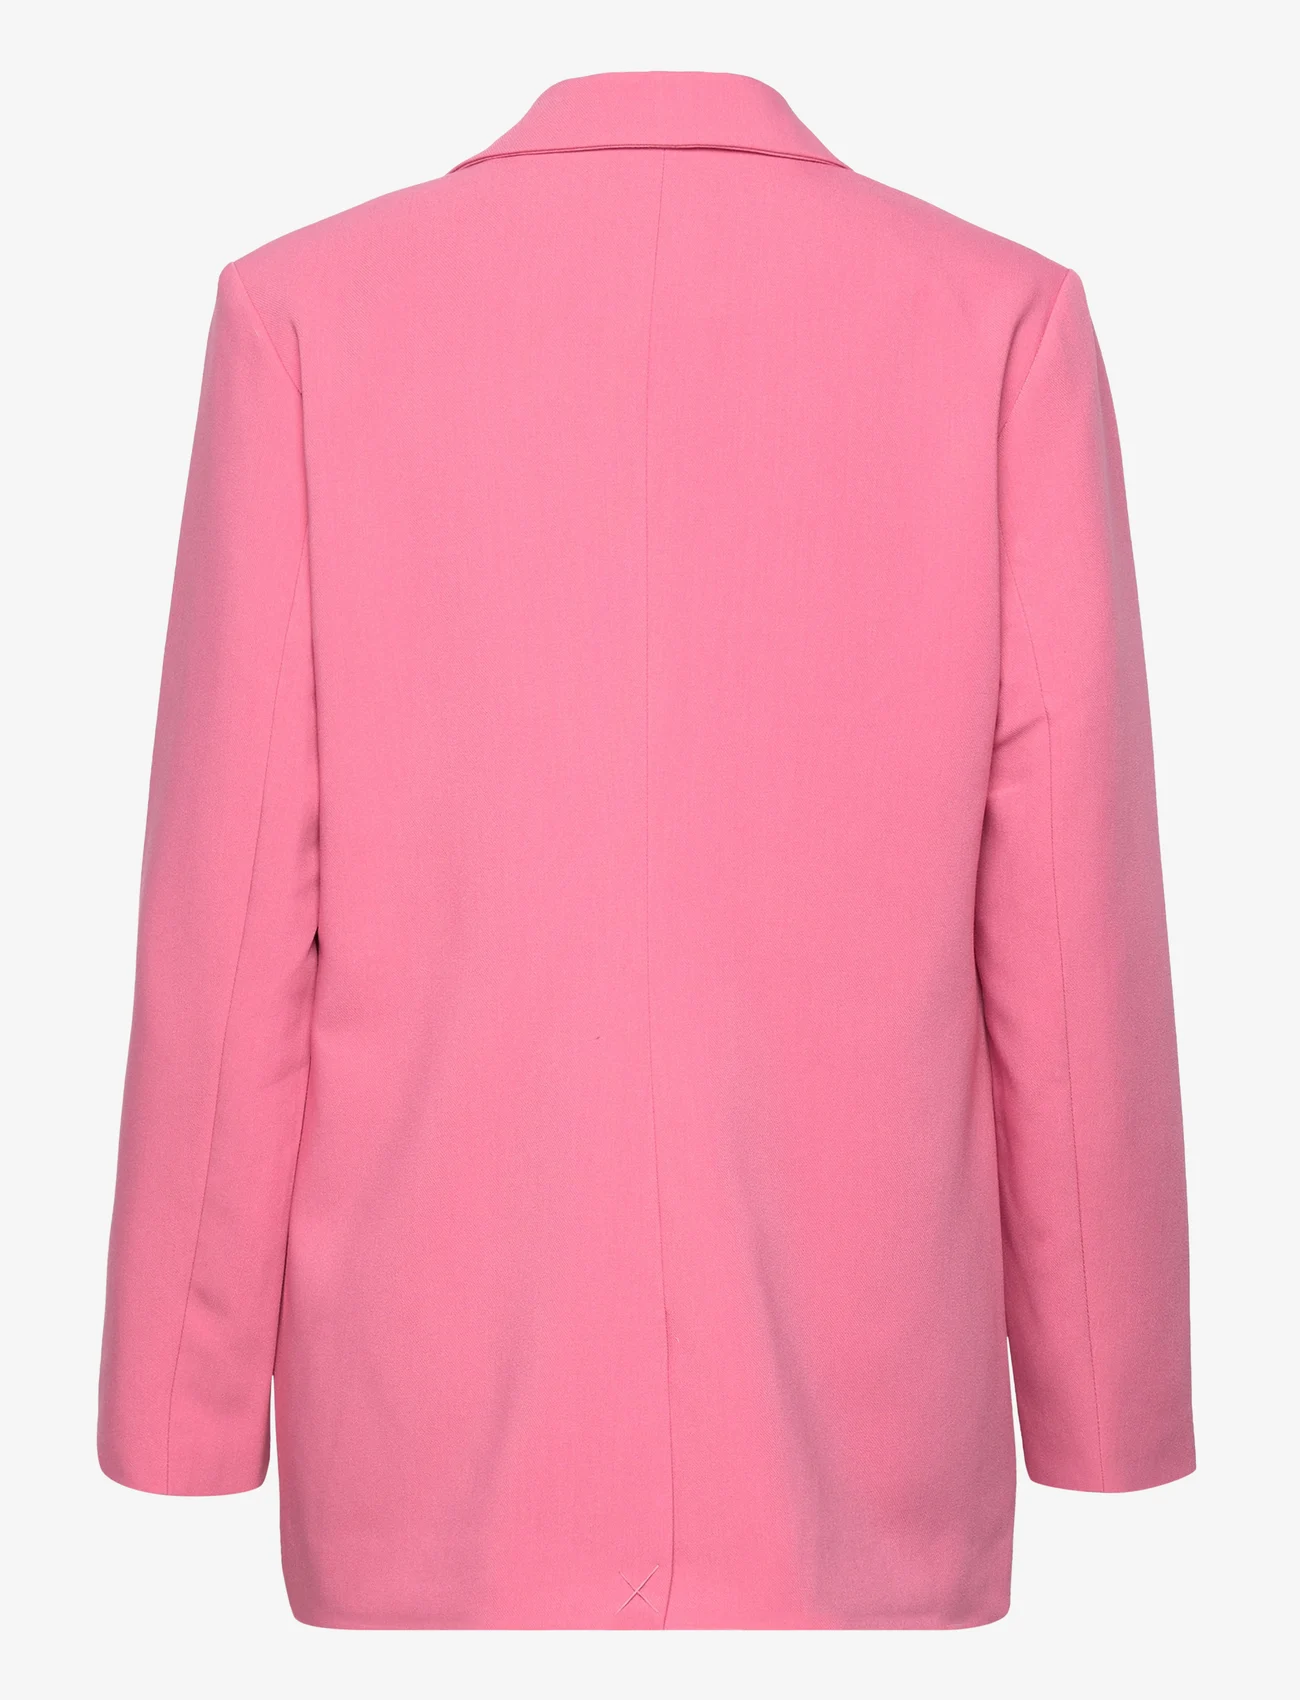 Sofie Schnoor - Blazer - ballīšu apģērbs par outlet cenām - bright pink - 1